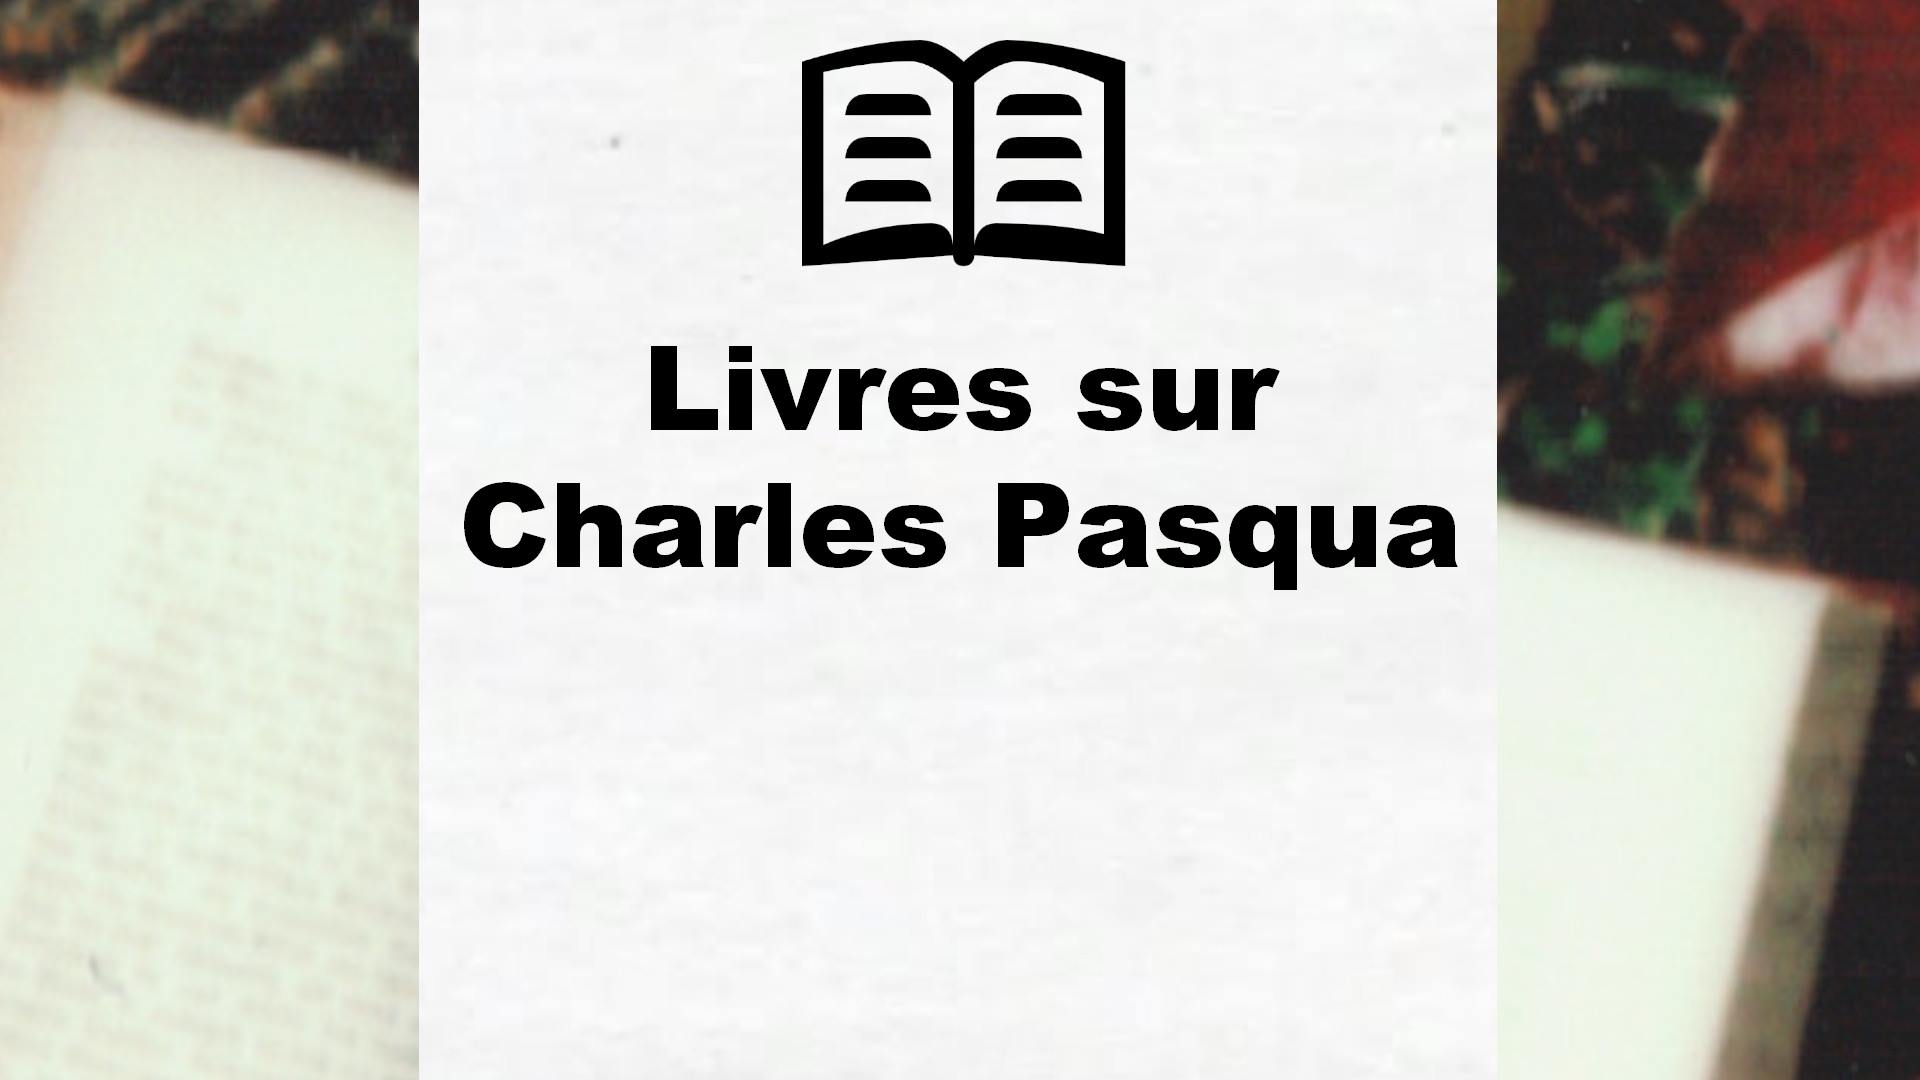 Livres sur Charles Pasqua